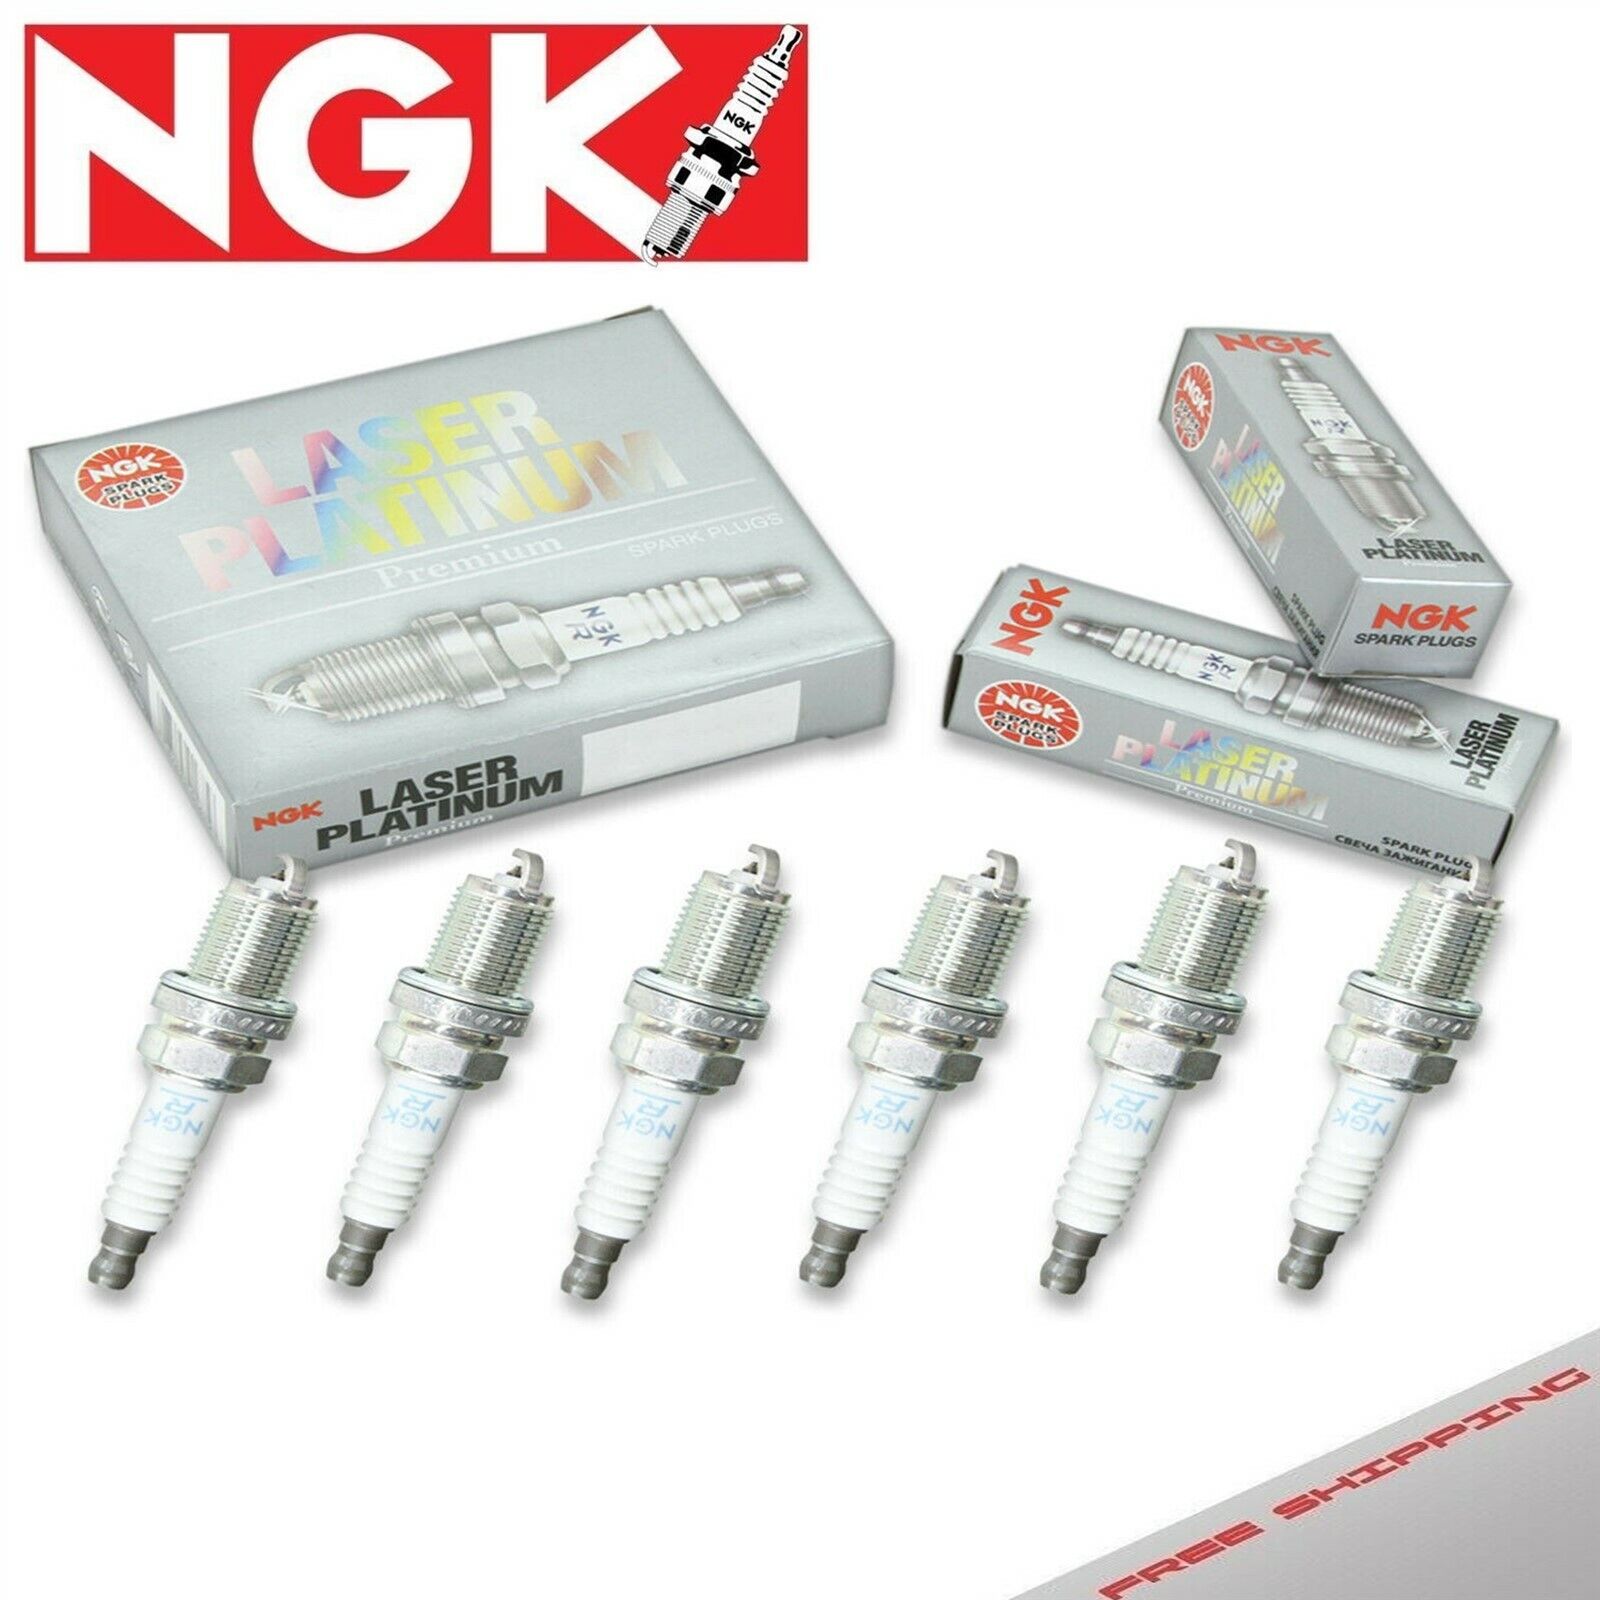 6 x Spark Plugs Made in Japan NGK Laser Platinum 4497 BCPR6EP-N-11 4497